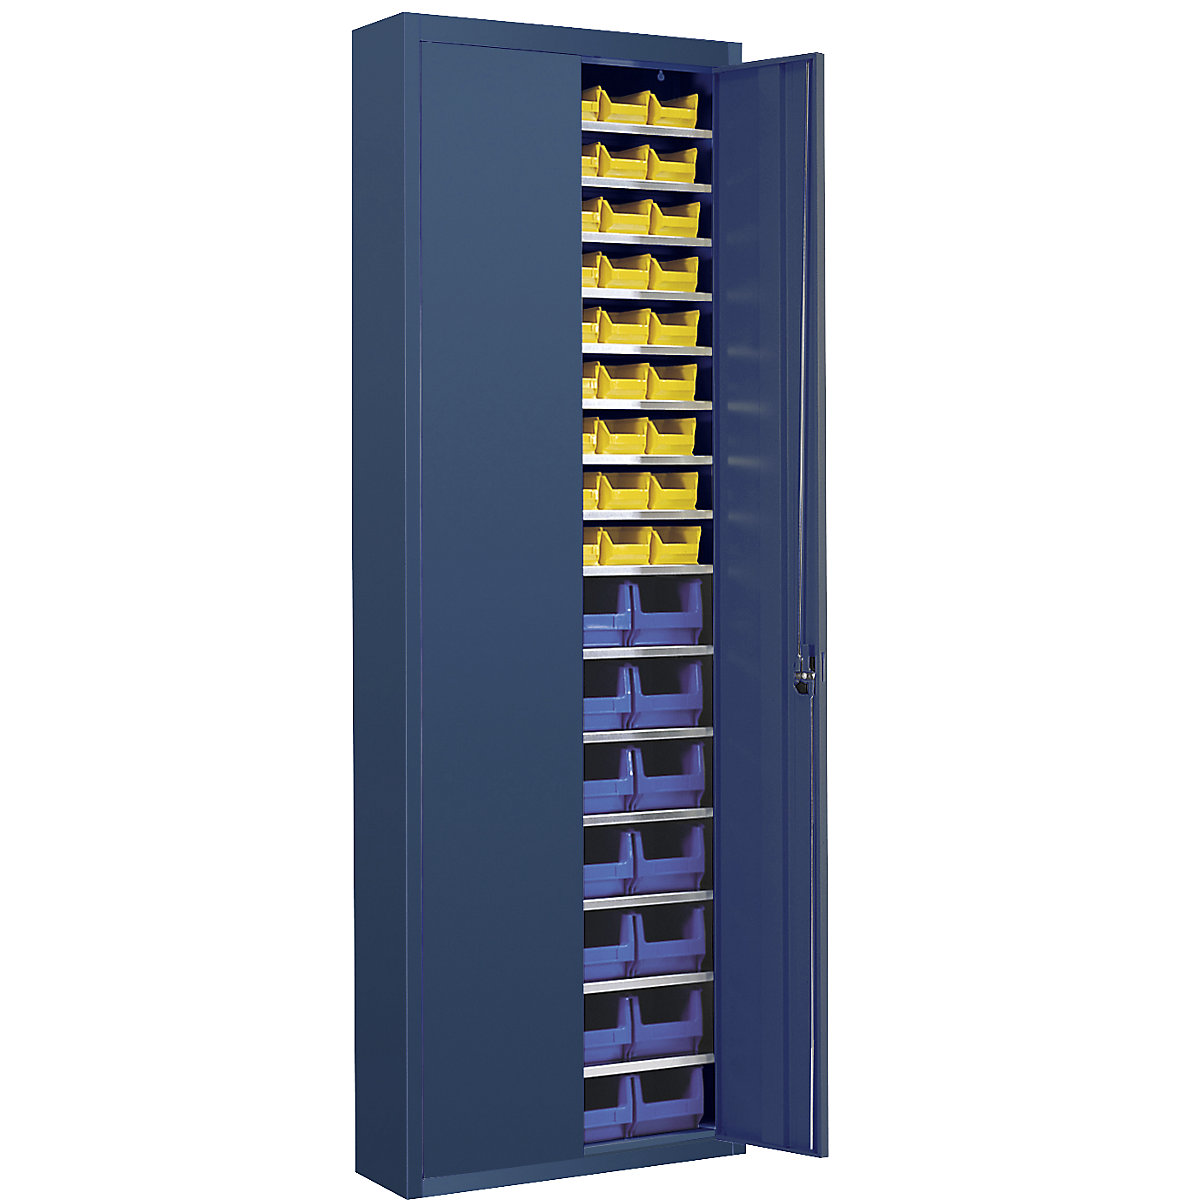 Storage cupboard with open fronted storage bins – mauser, HxWxD 2150 x 680 x 280 mm, single colour, blue, 82 bins-11